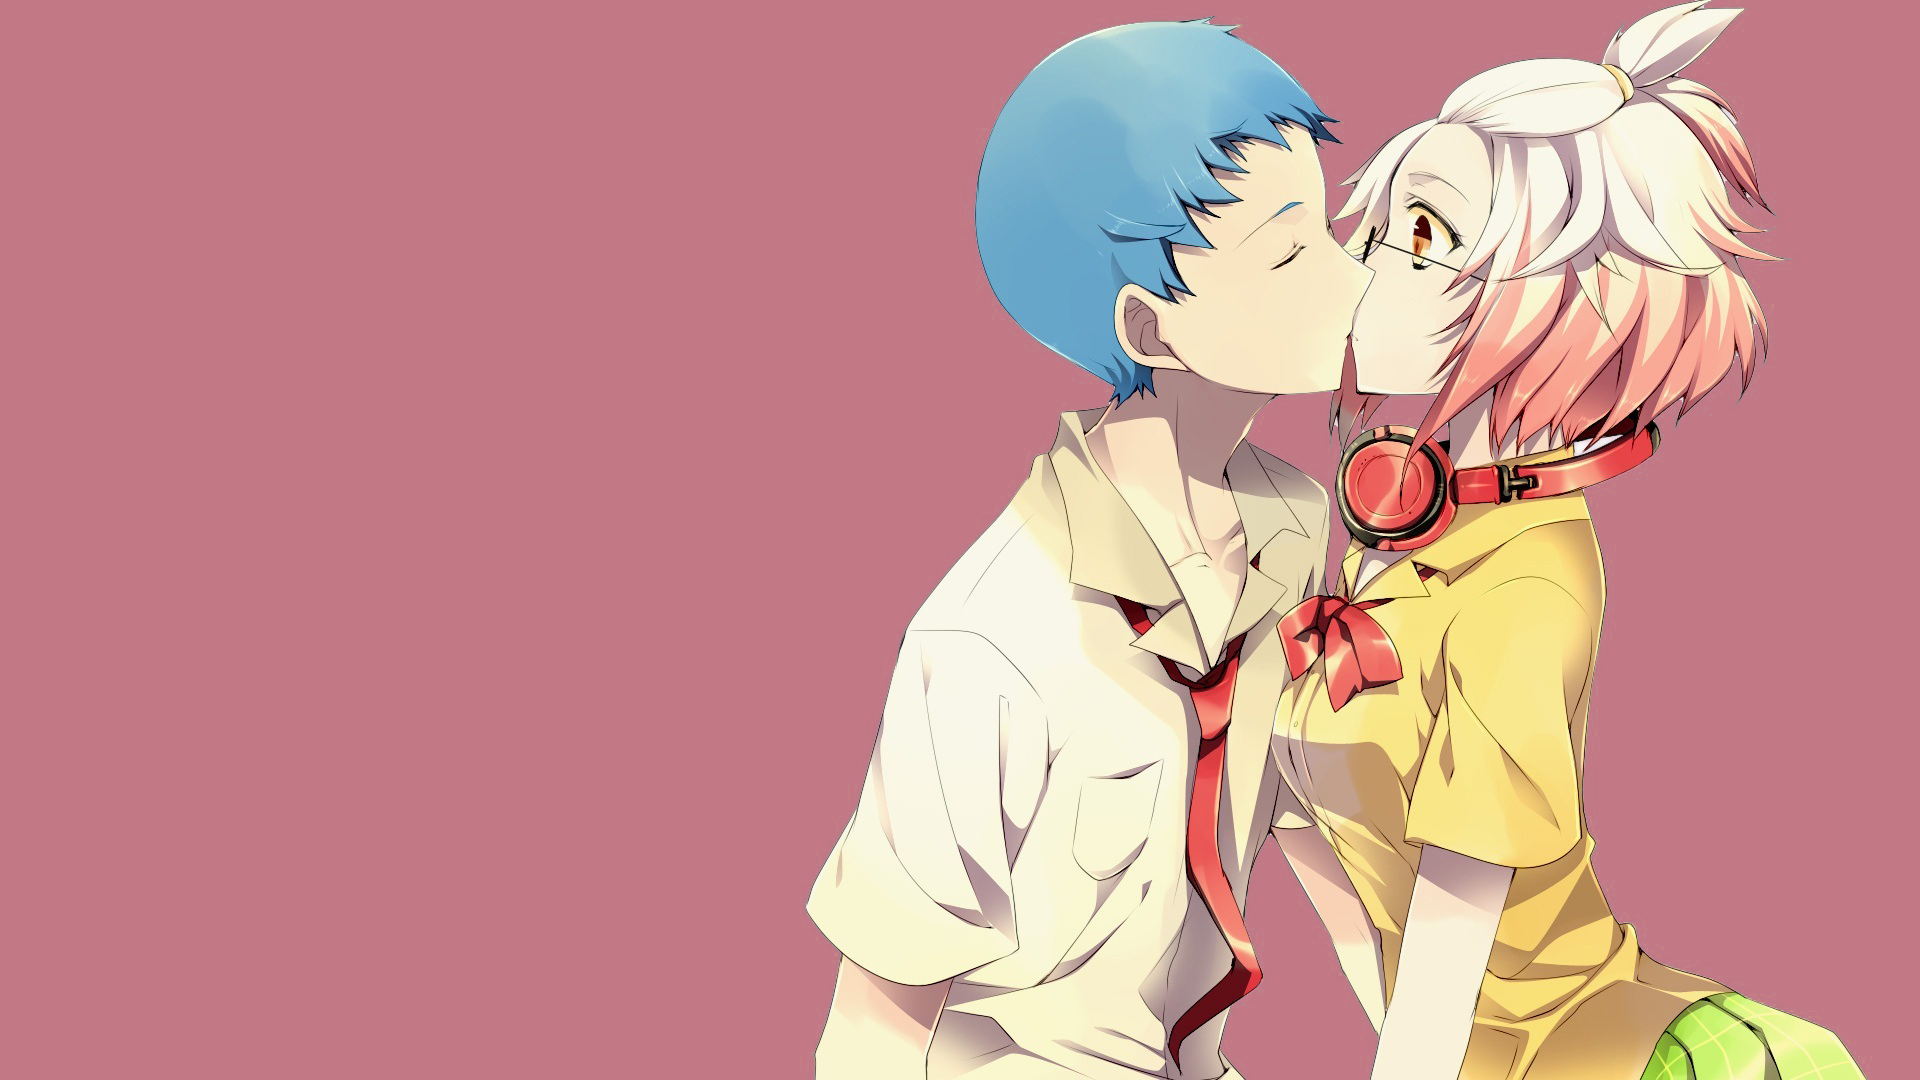 Anime Couple Surprise Kiss Wallpaper 1920x1080 14673